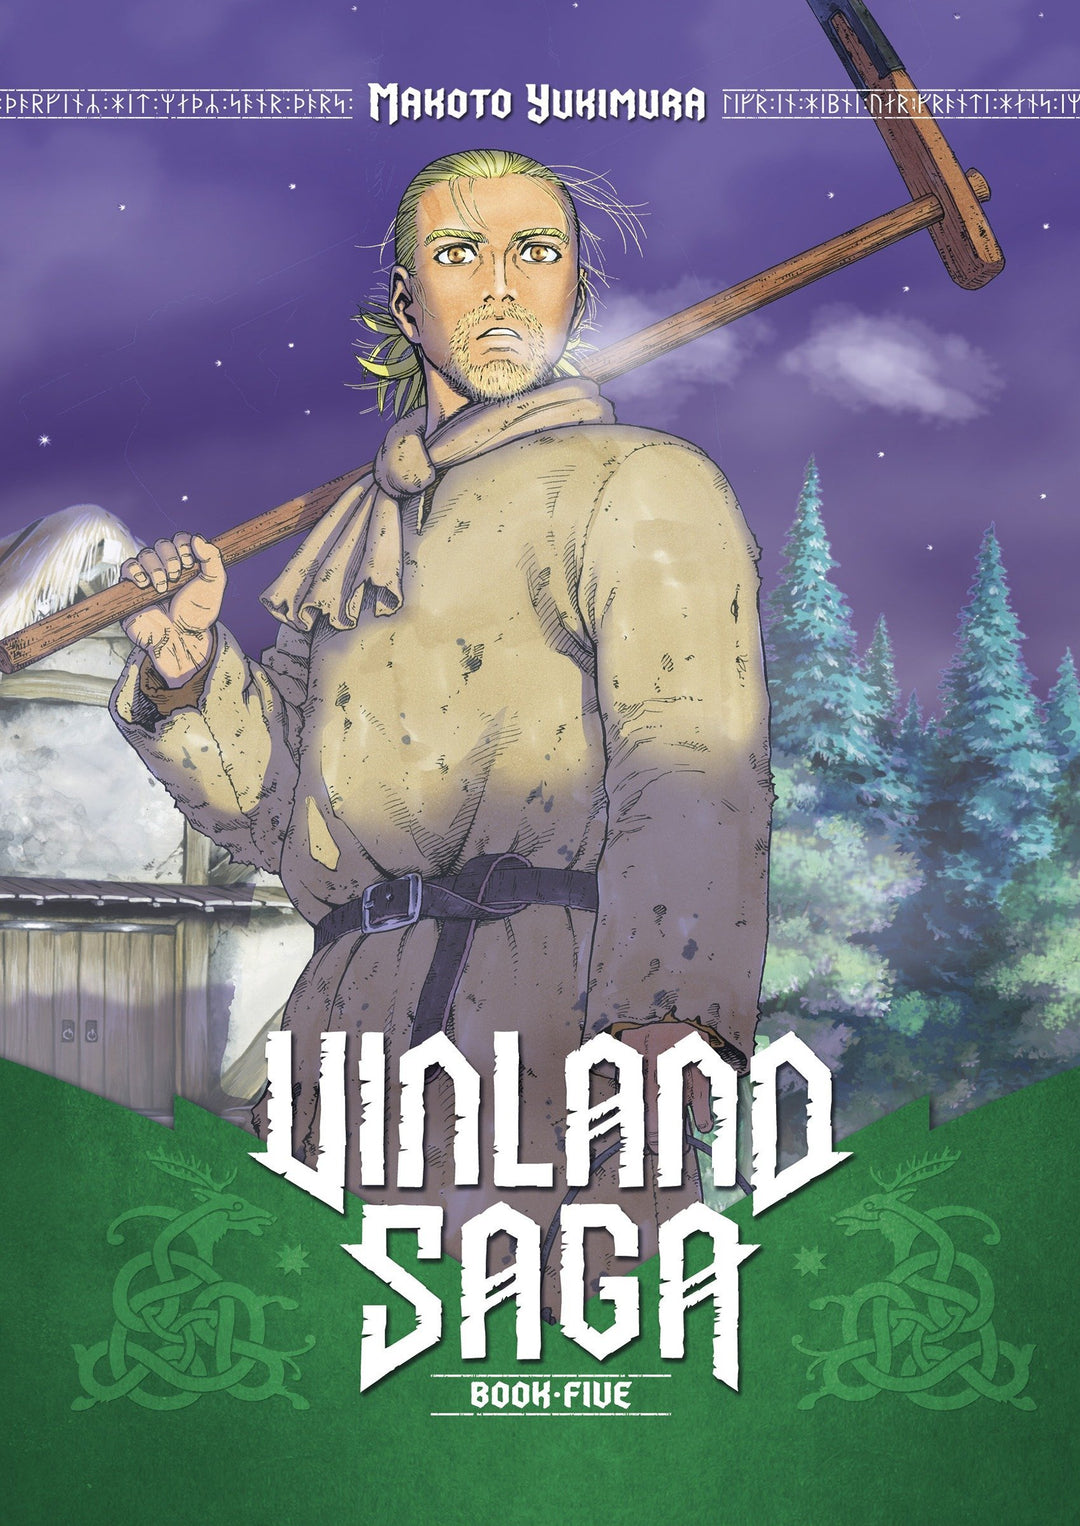 Vinland Saga Graphic Novel Volume 05